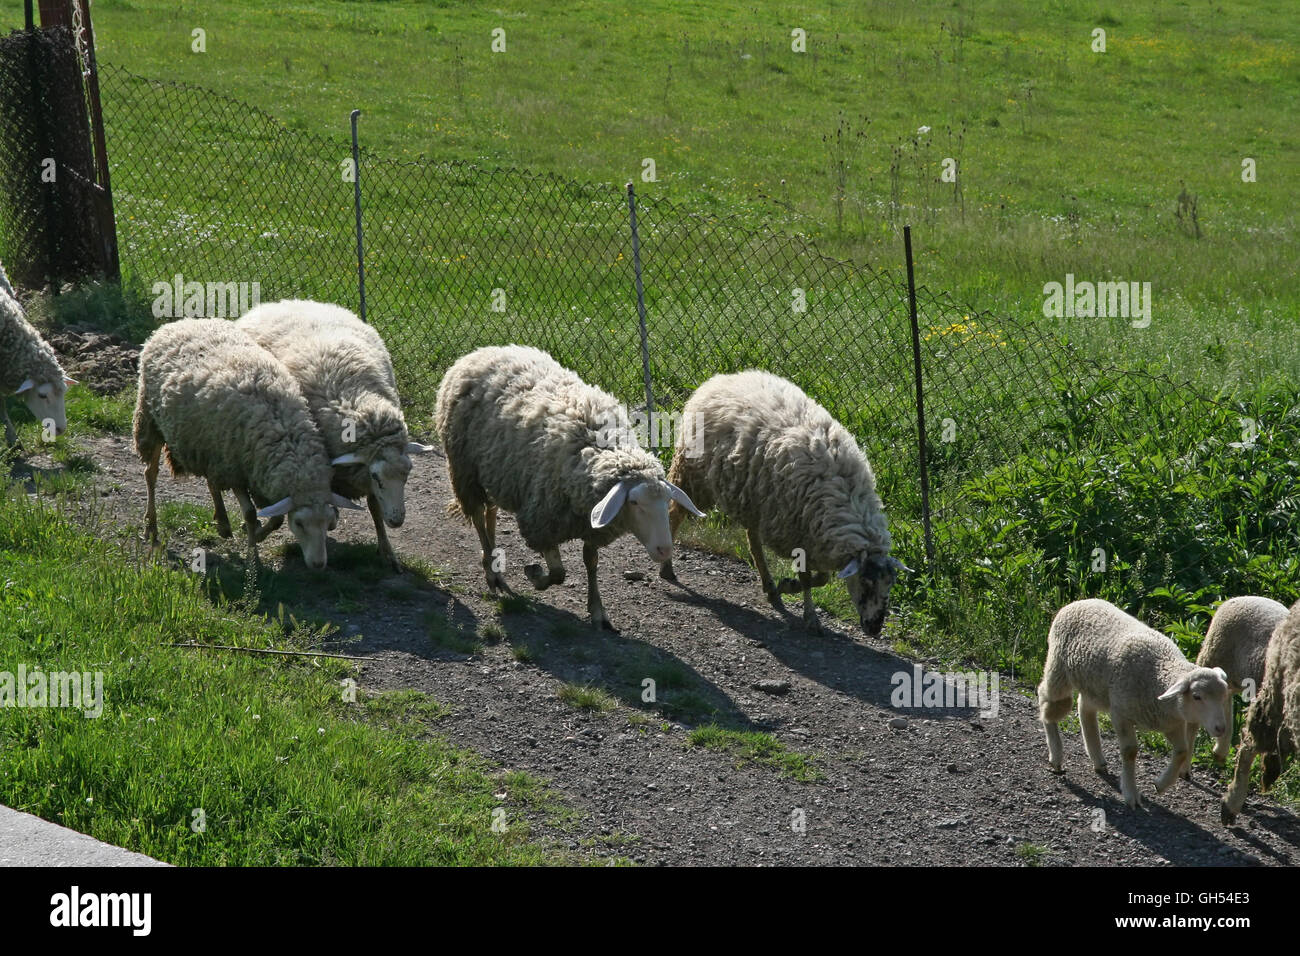 Sheep grazing grass. Sheep grazing. Stock Photo